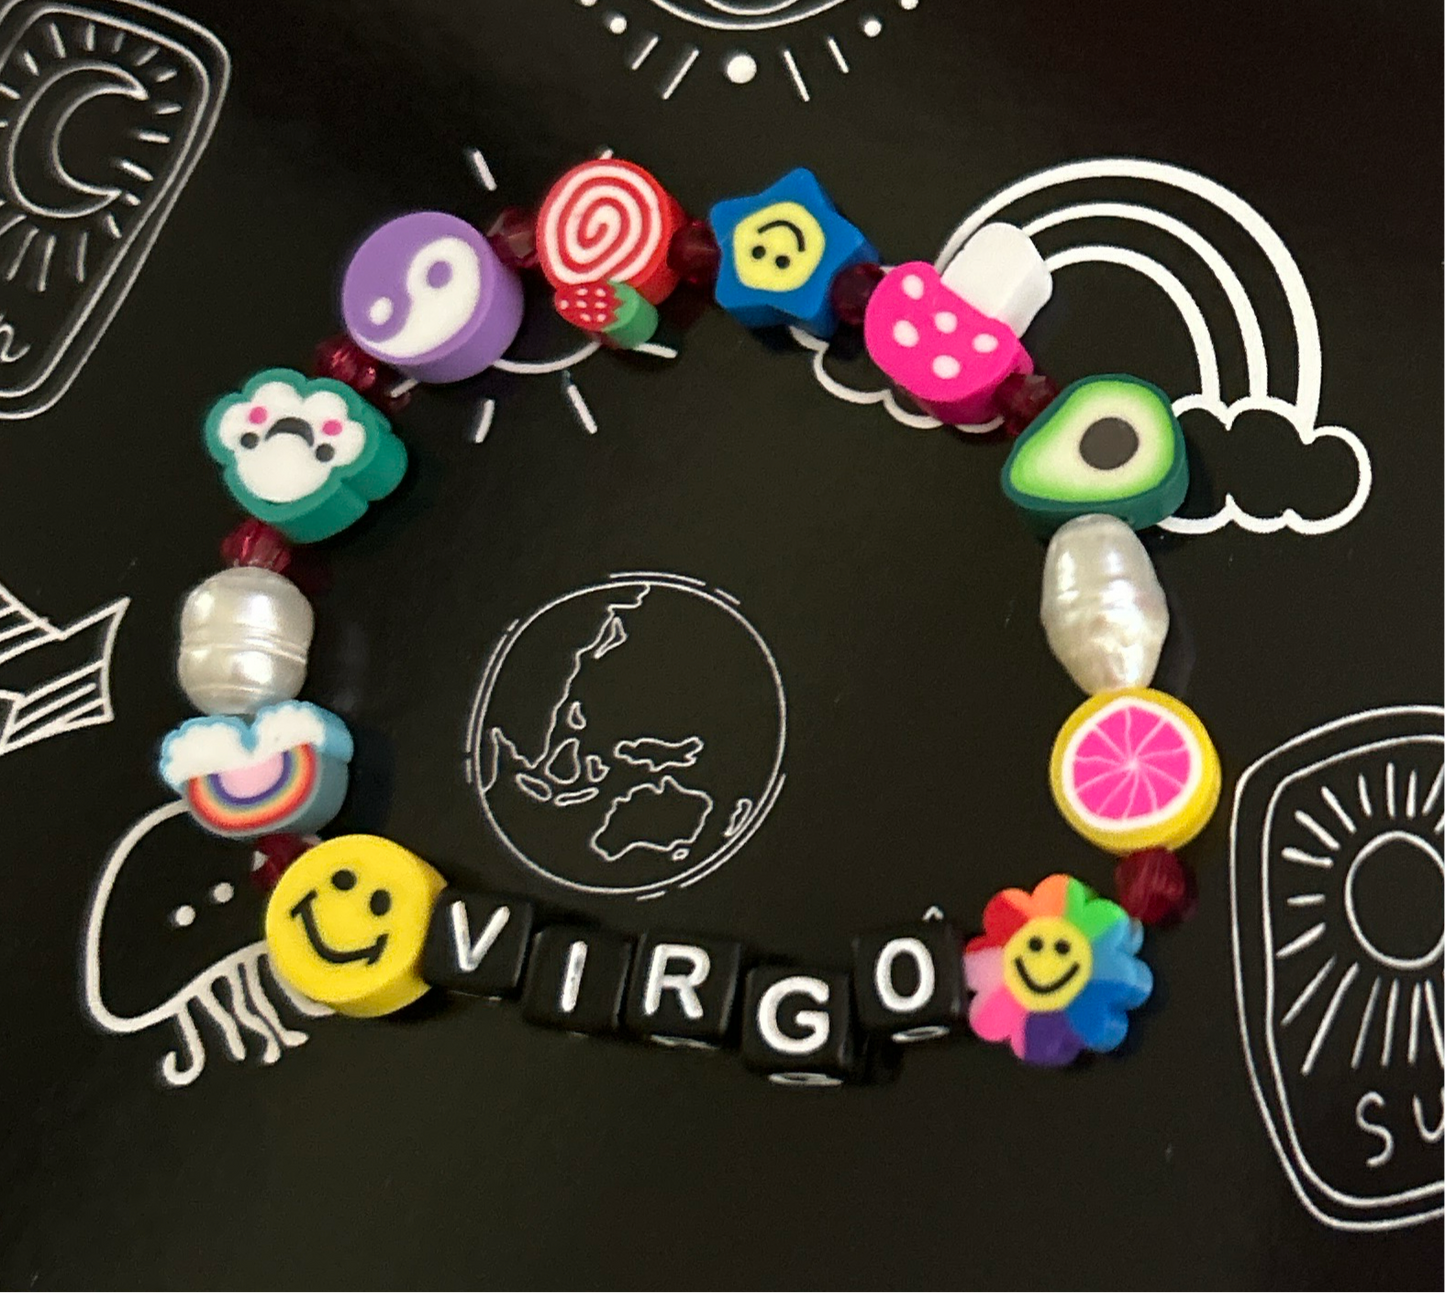 Kids Zodiac "Virgo" Bracelet